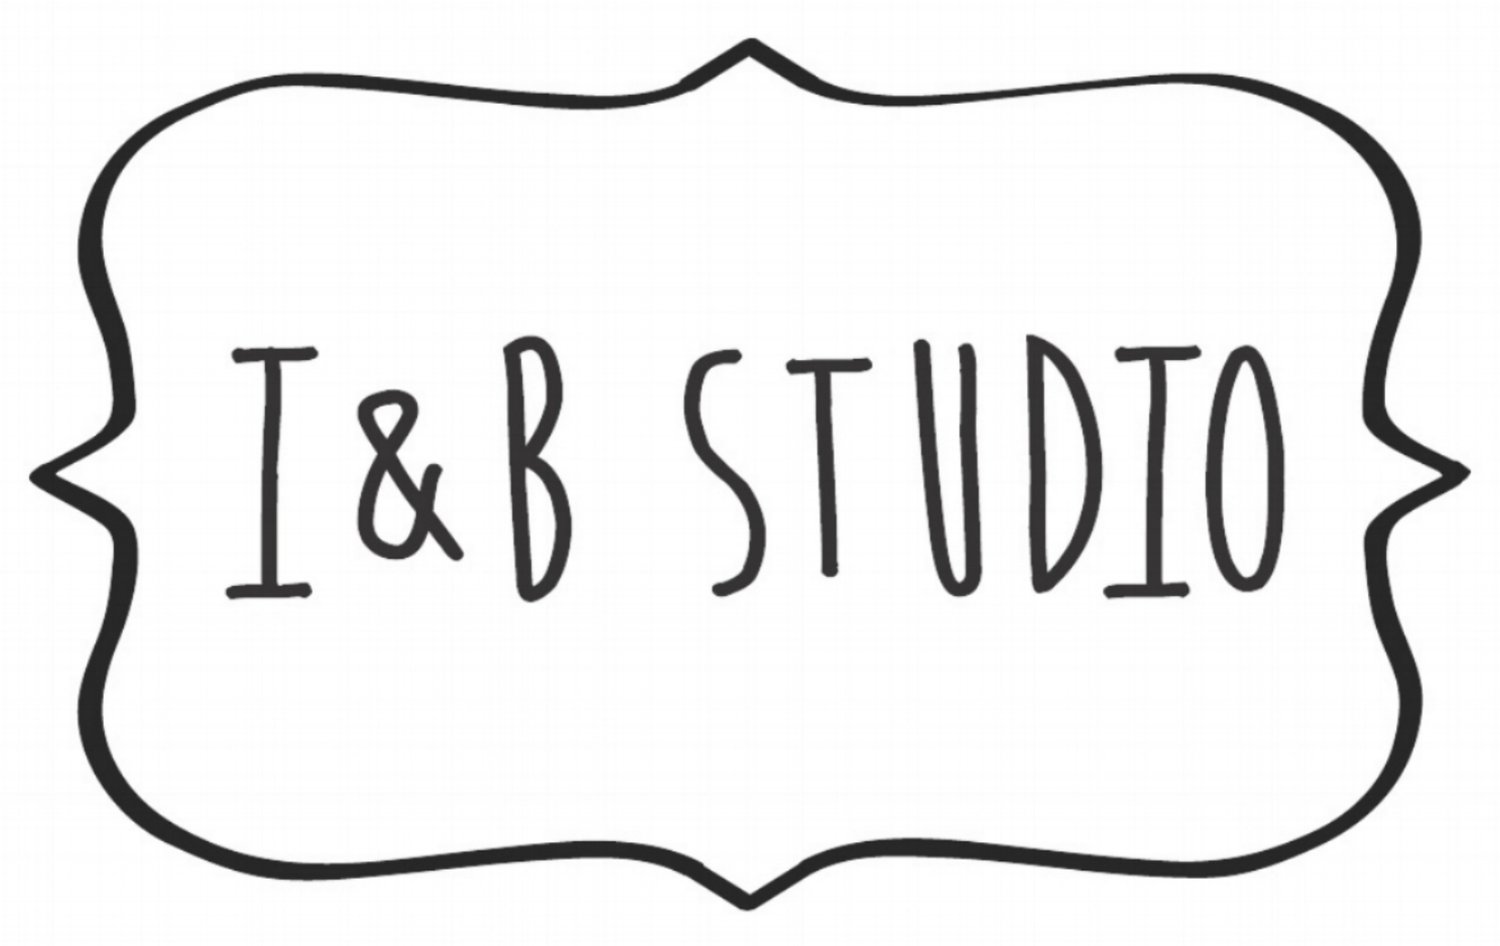 I & B Studio